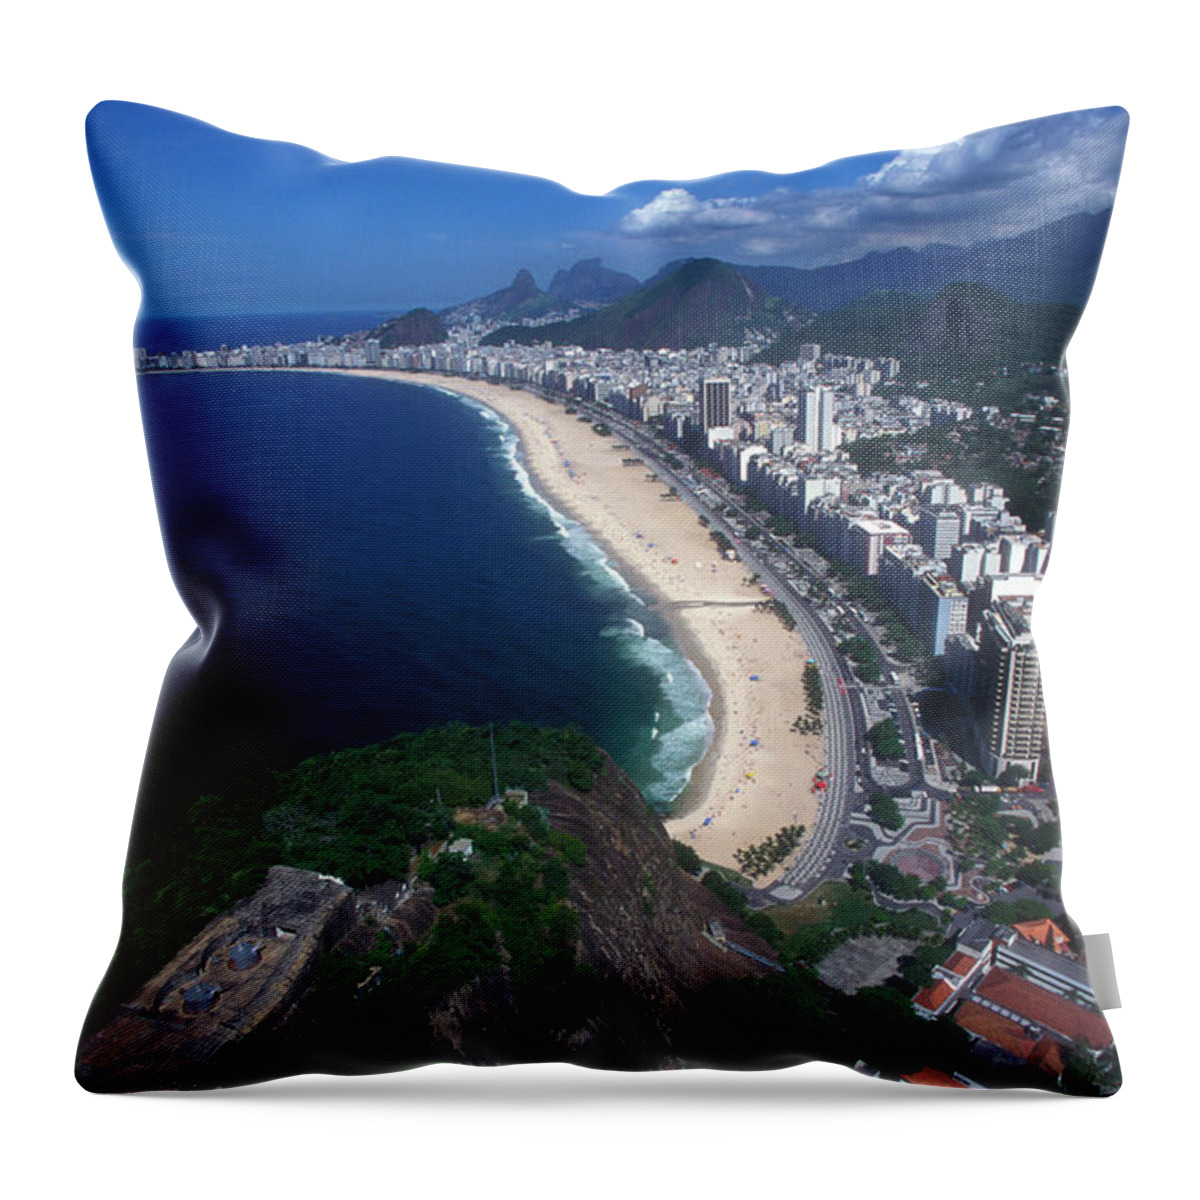 Built Structure Throw Pillow featuring the photograph Copacabana by Brasil2